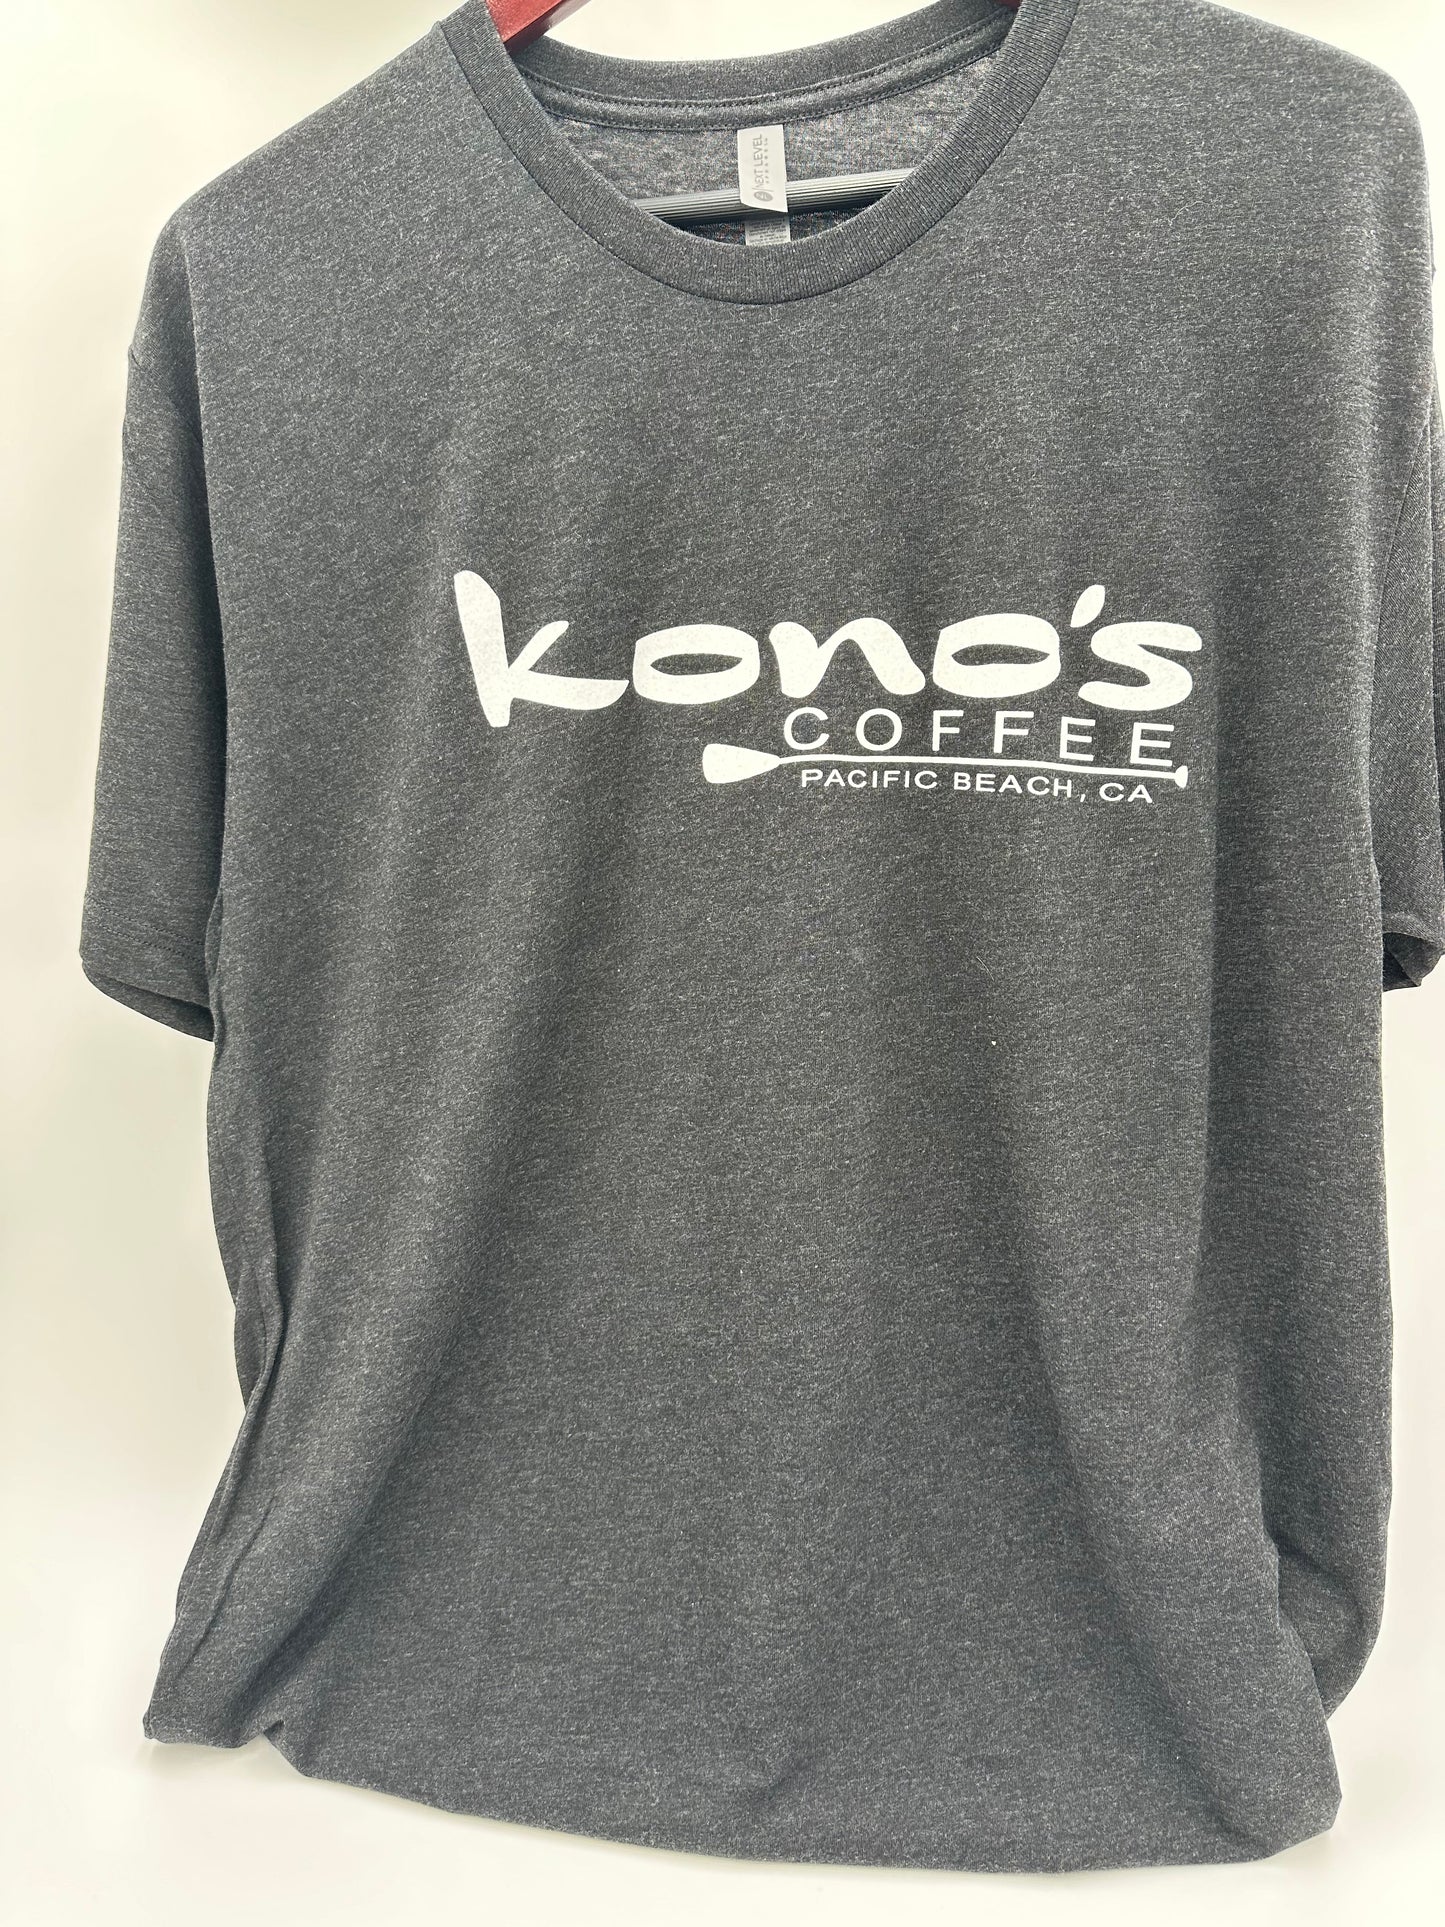 KONO'S COFFEE LOGO TEE